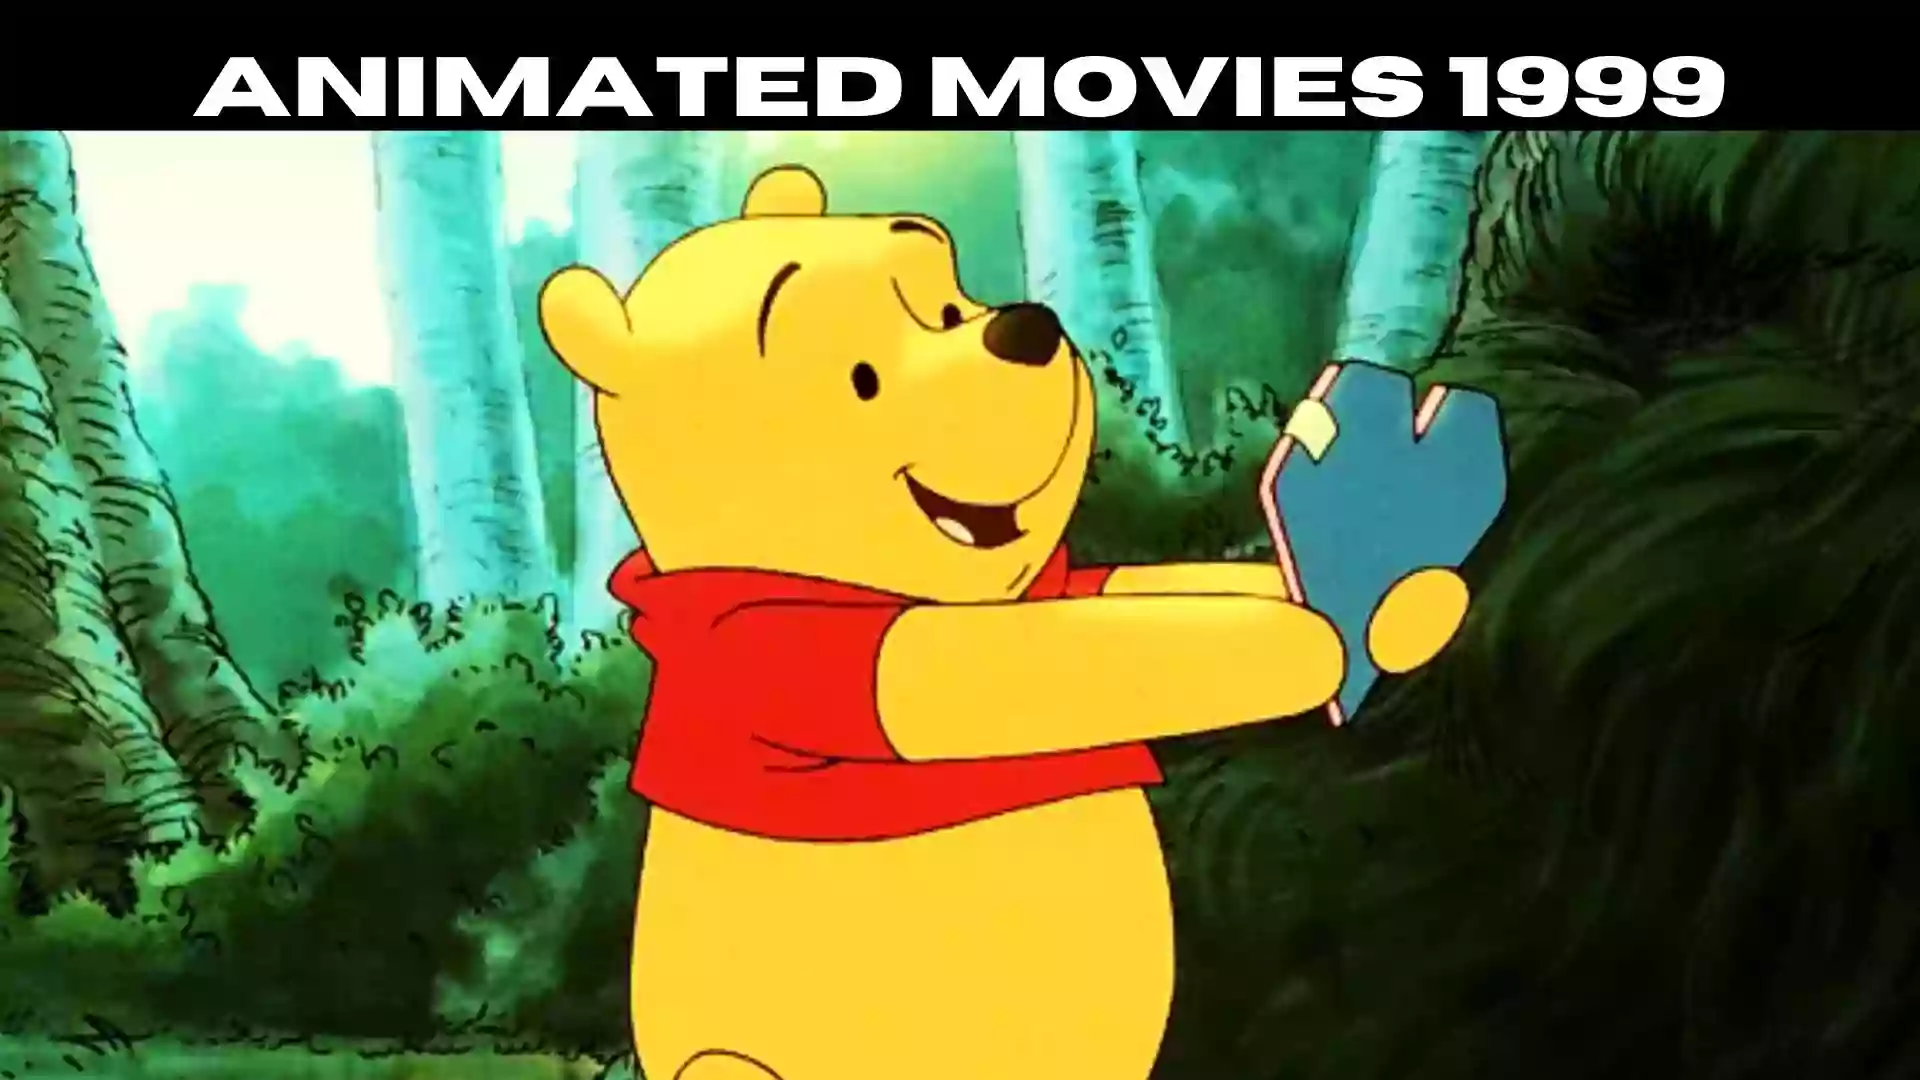 Animated Movies 1999